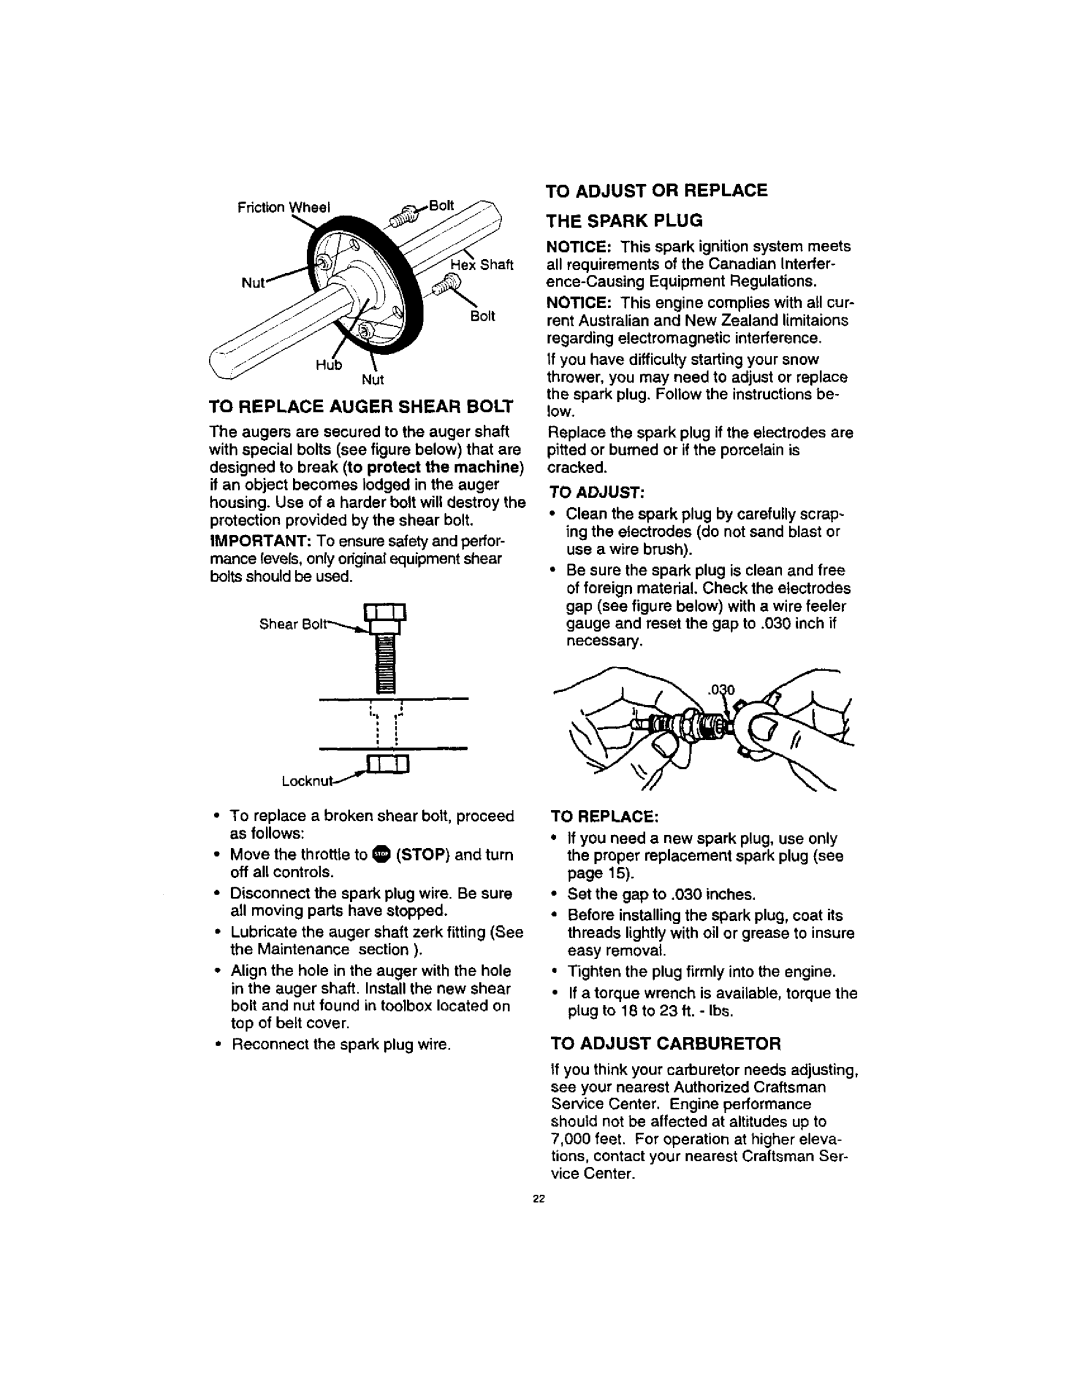 Craftsman 536.88123 To Replace Auger Shear Bolt, To Adjust Or Replace The Spark Plug, To Adjust Carburetor 